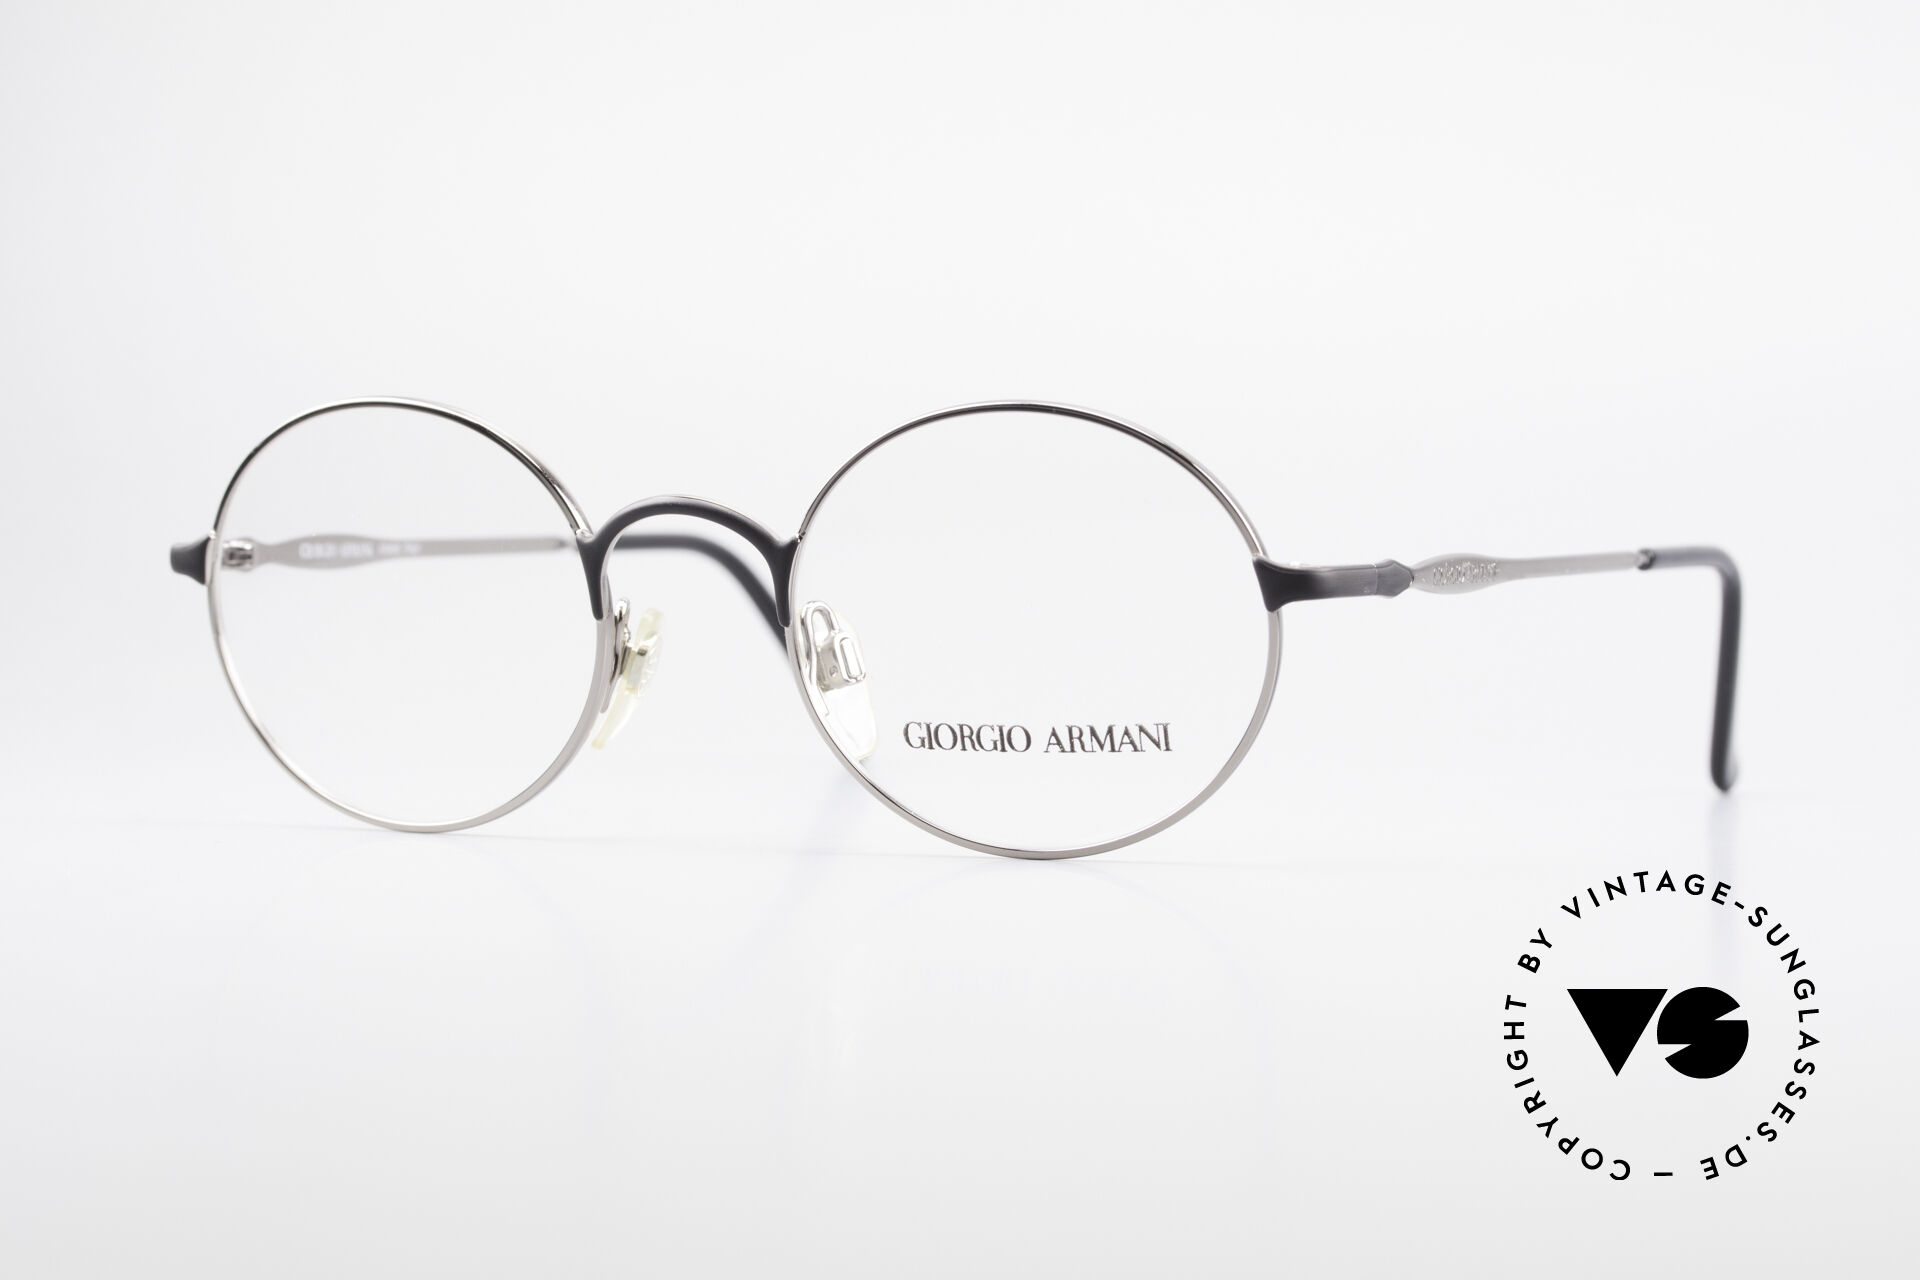 The Square Mile Prescription Glasses George Eyeglasses Frame